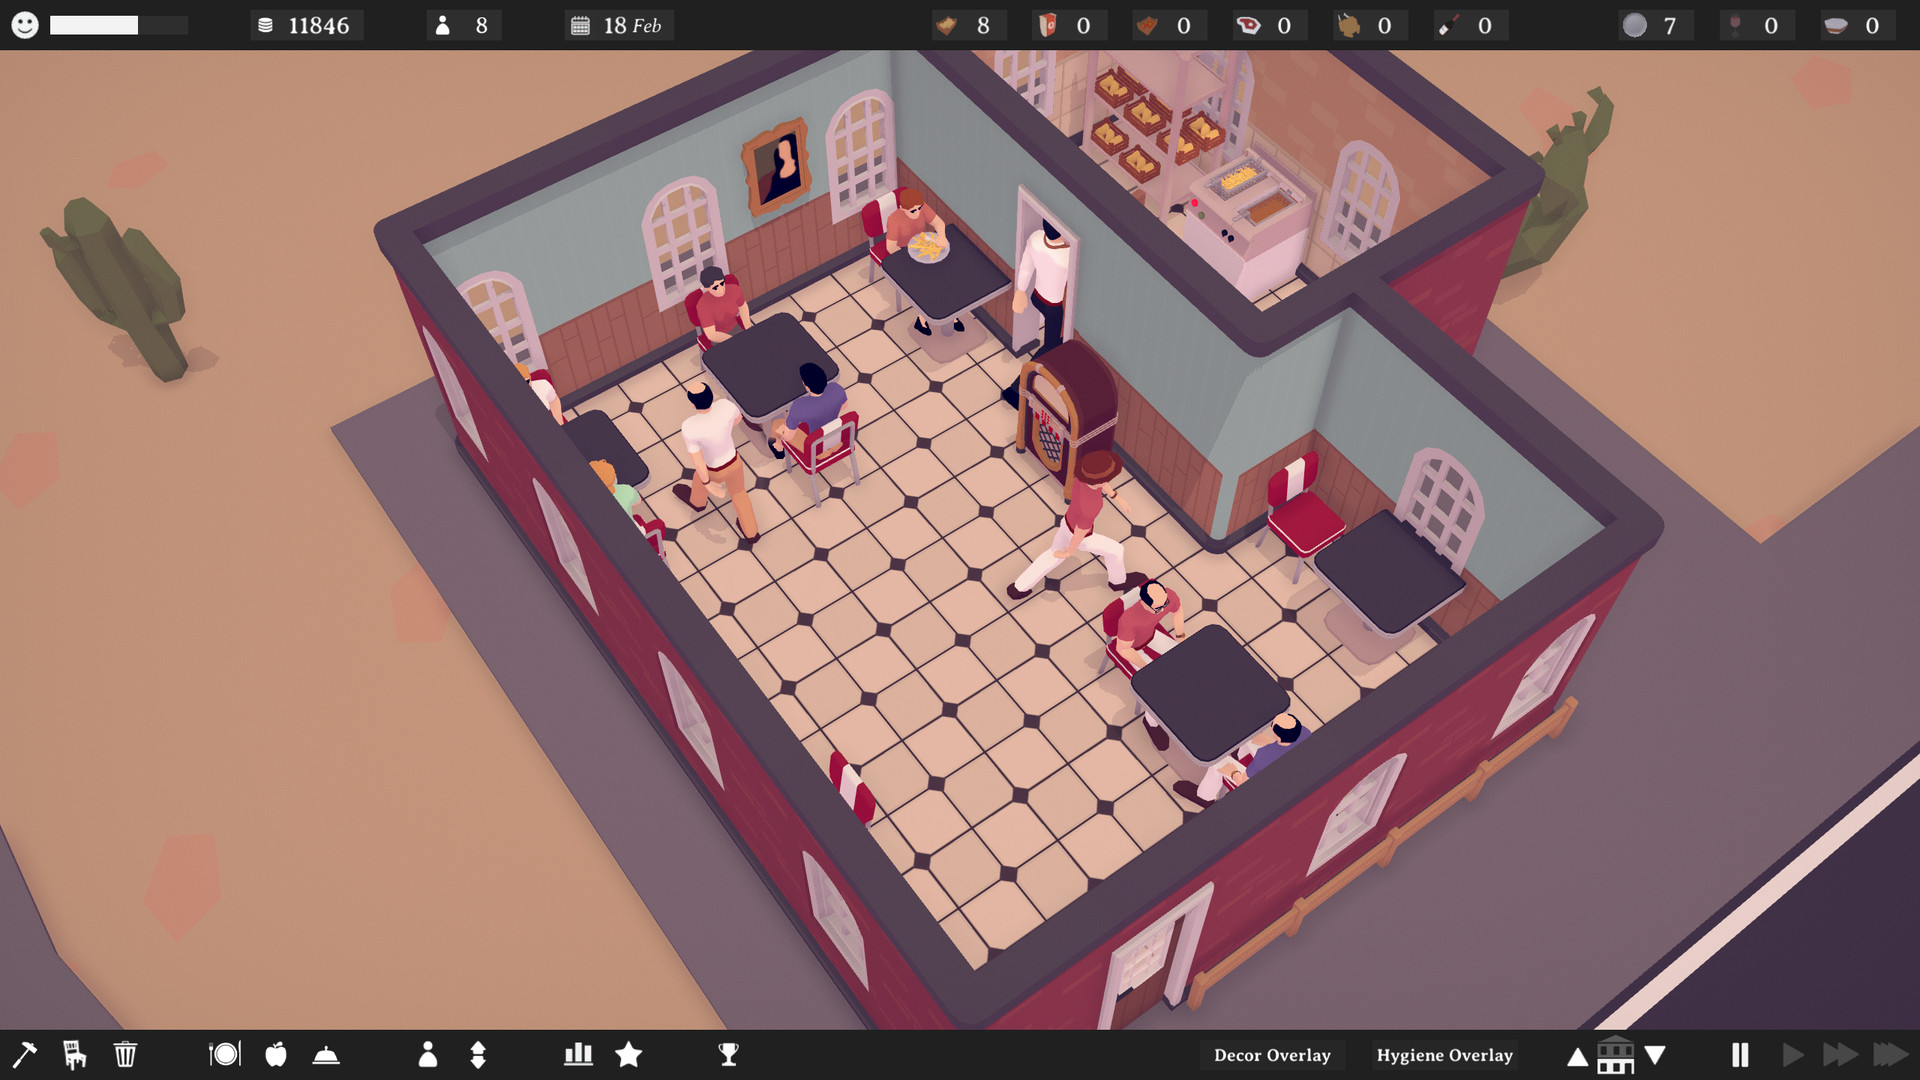 Tastemaker Restaurant Simulator On Steam